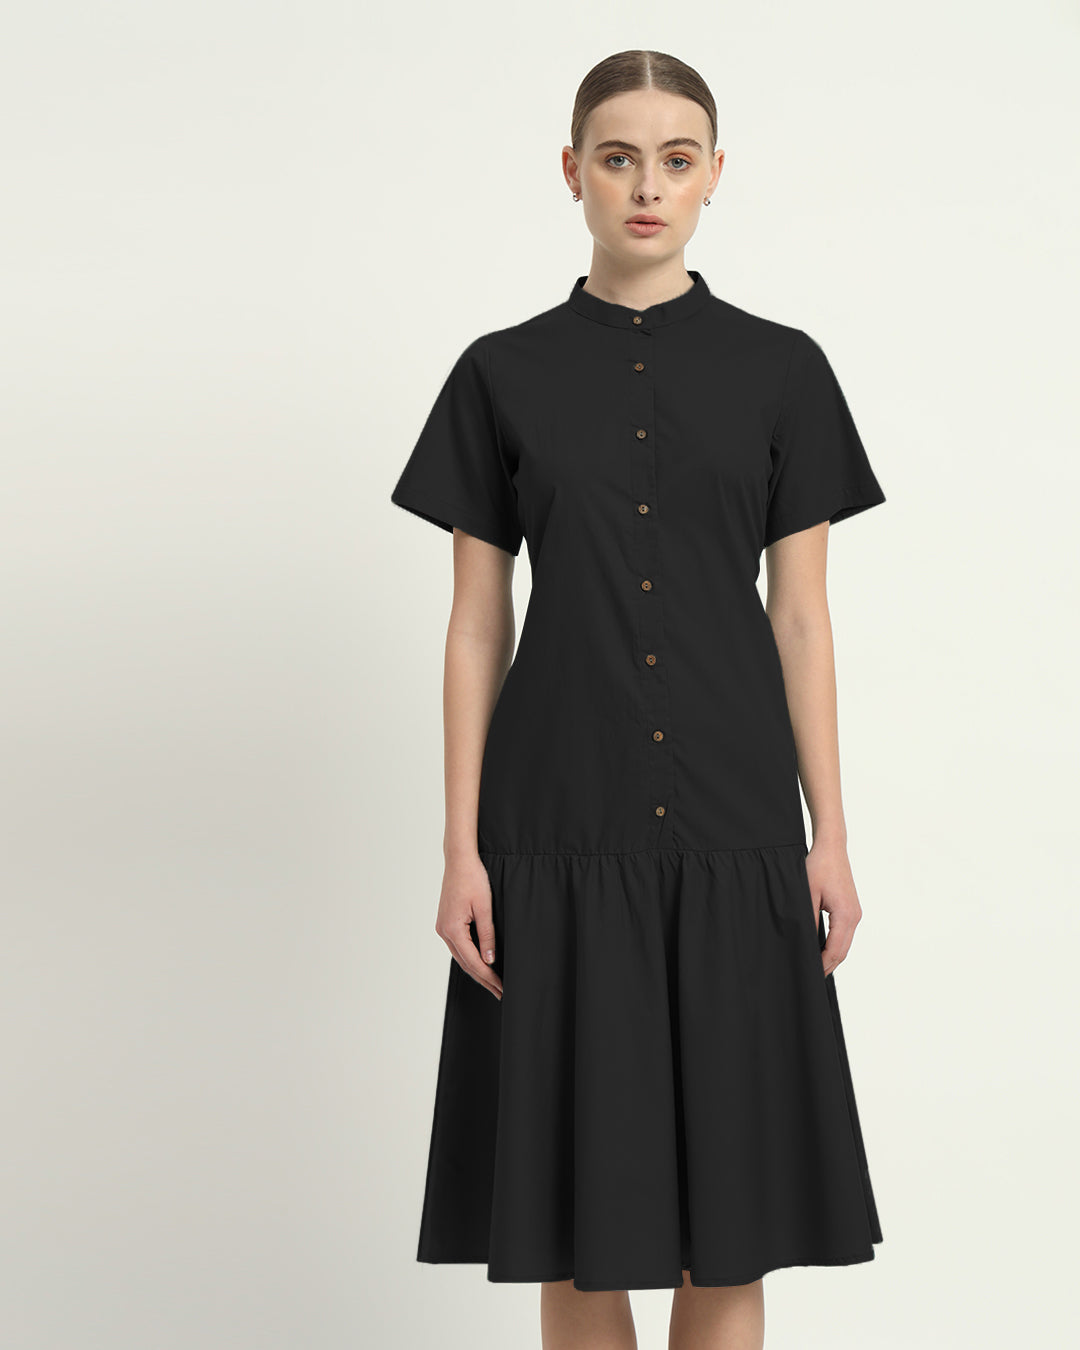 The Melrose Noir Cotton Dress